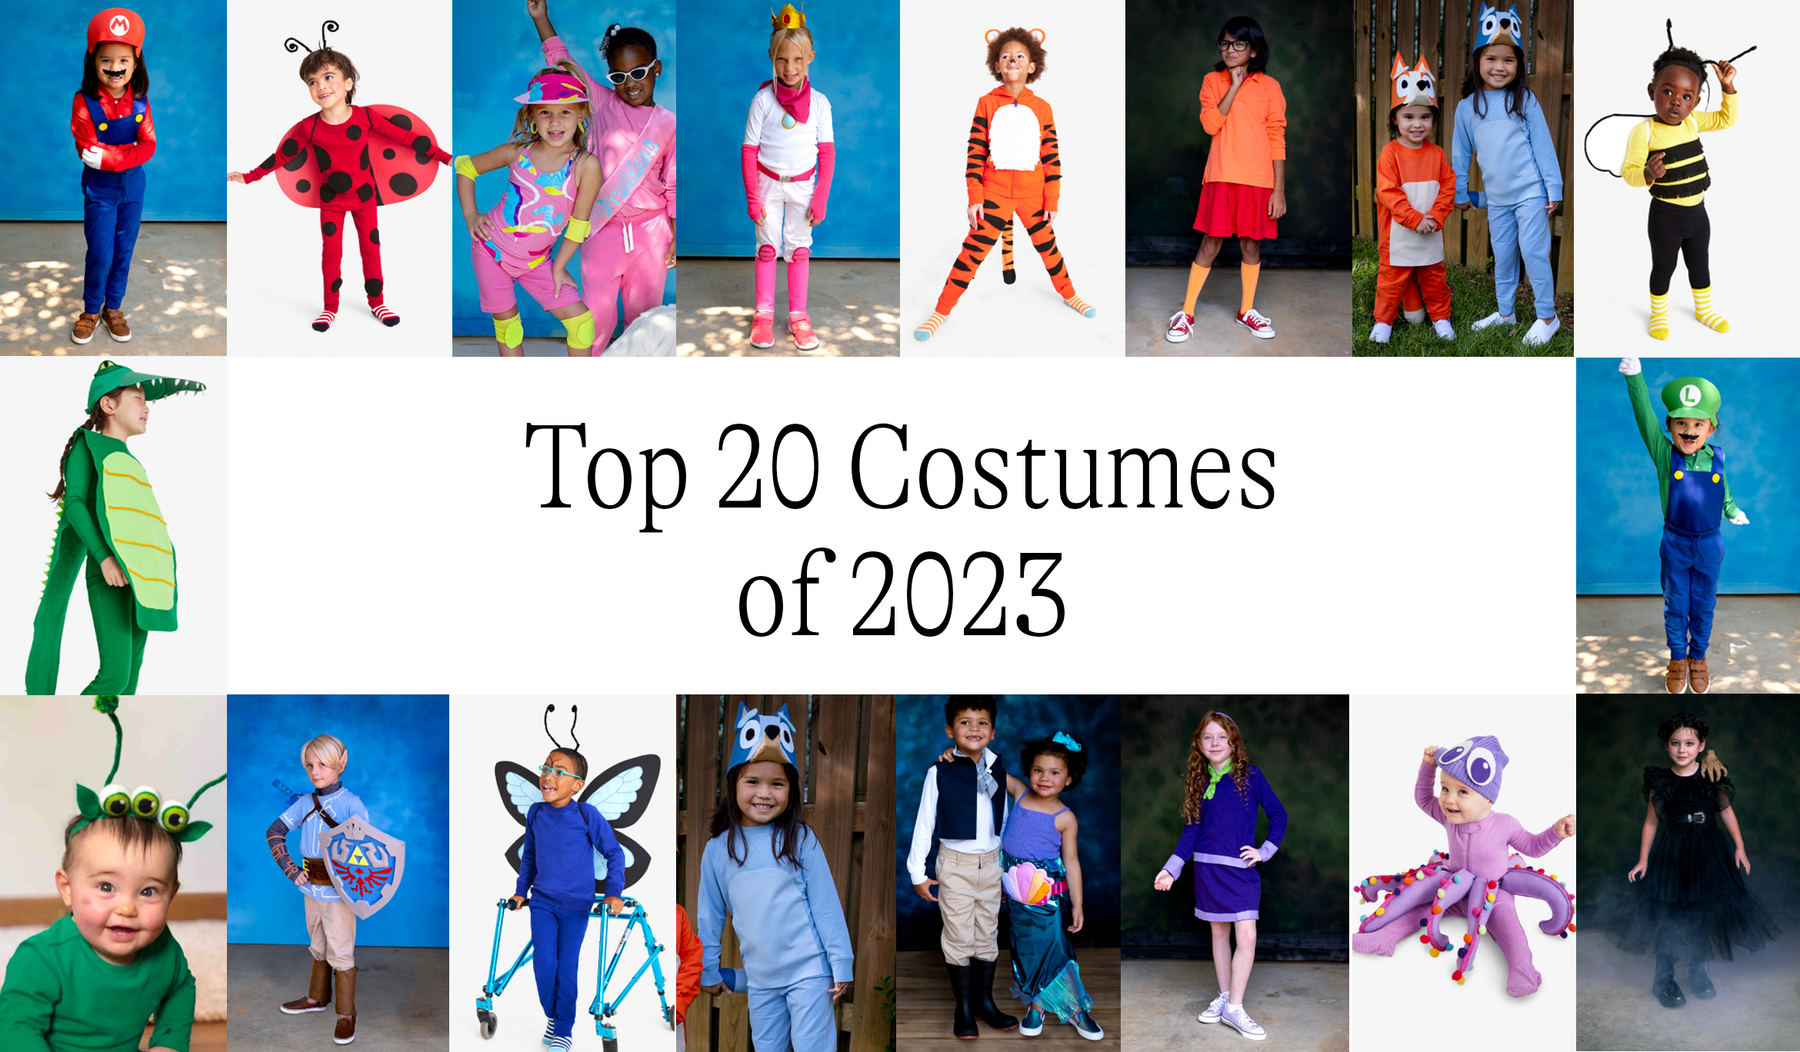 Primary's Top 20 Halloween Costumes of 2023